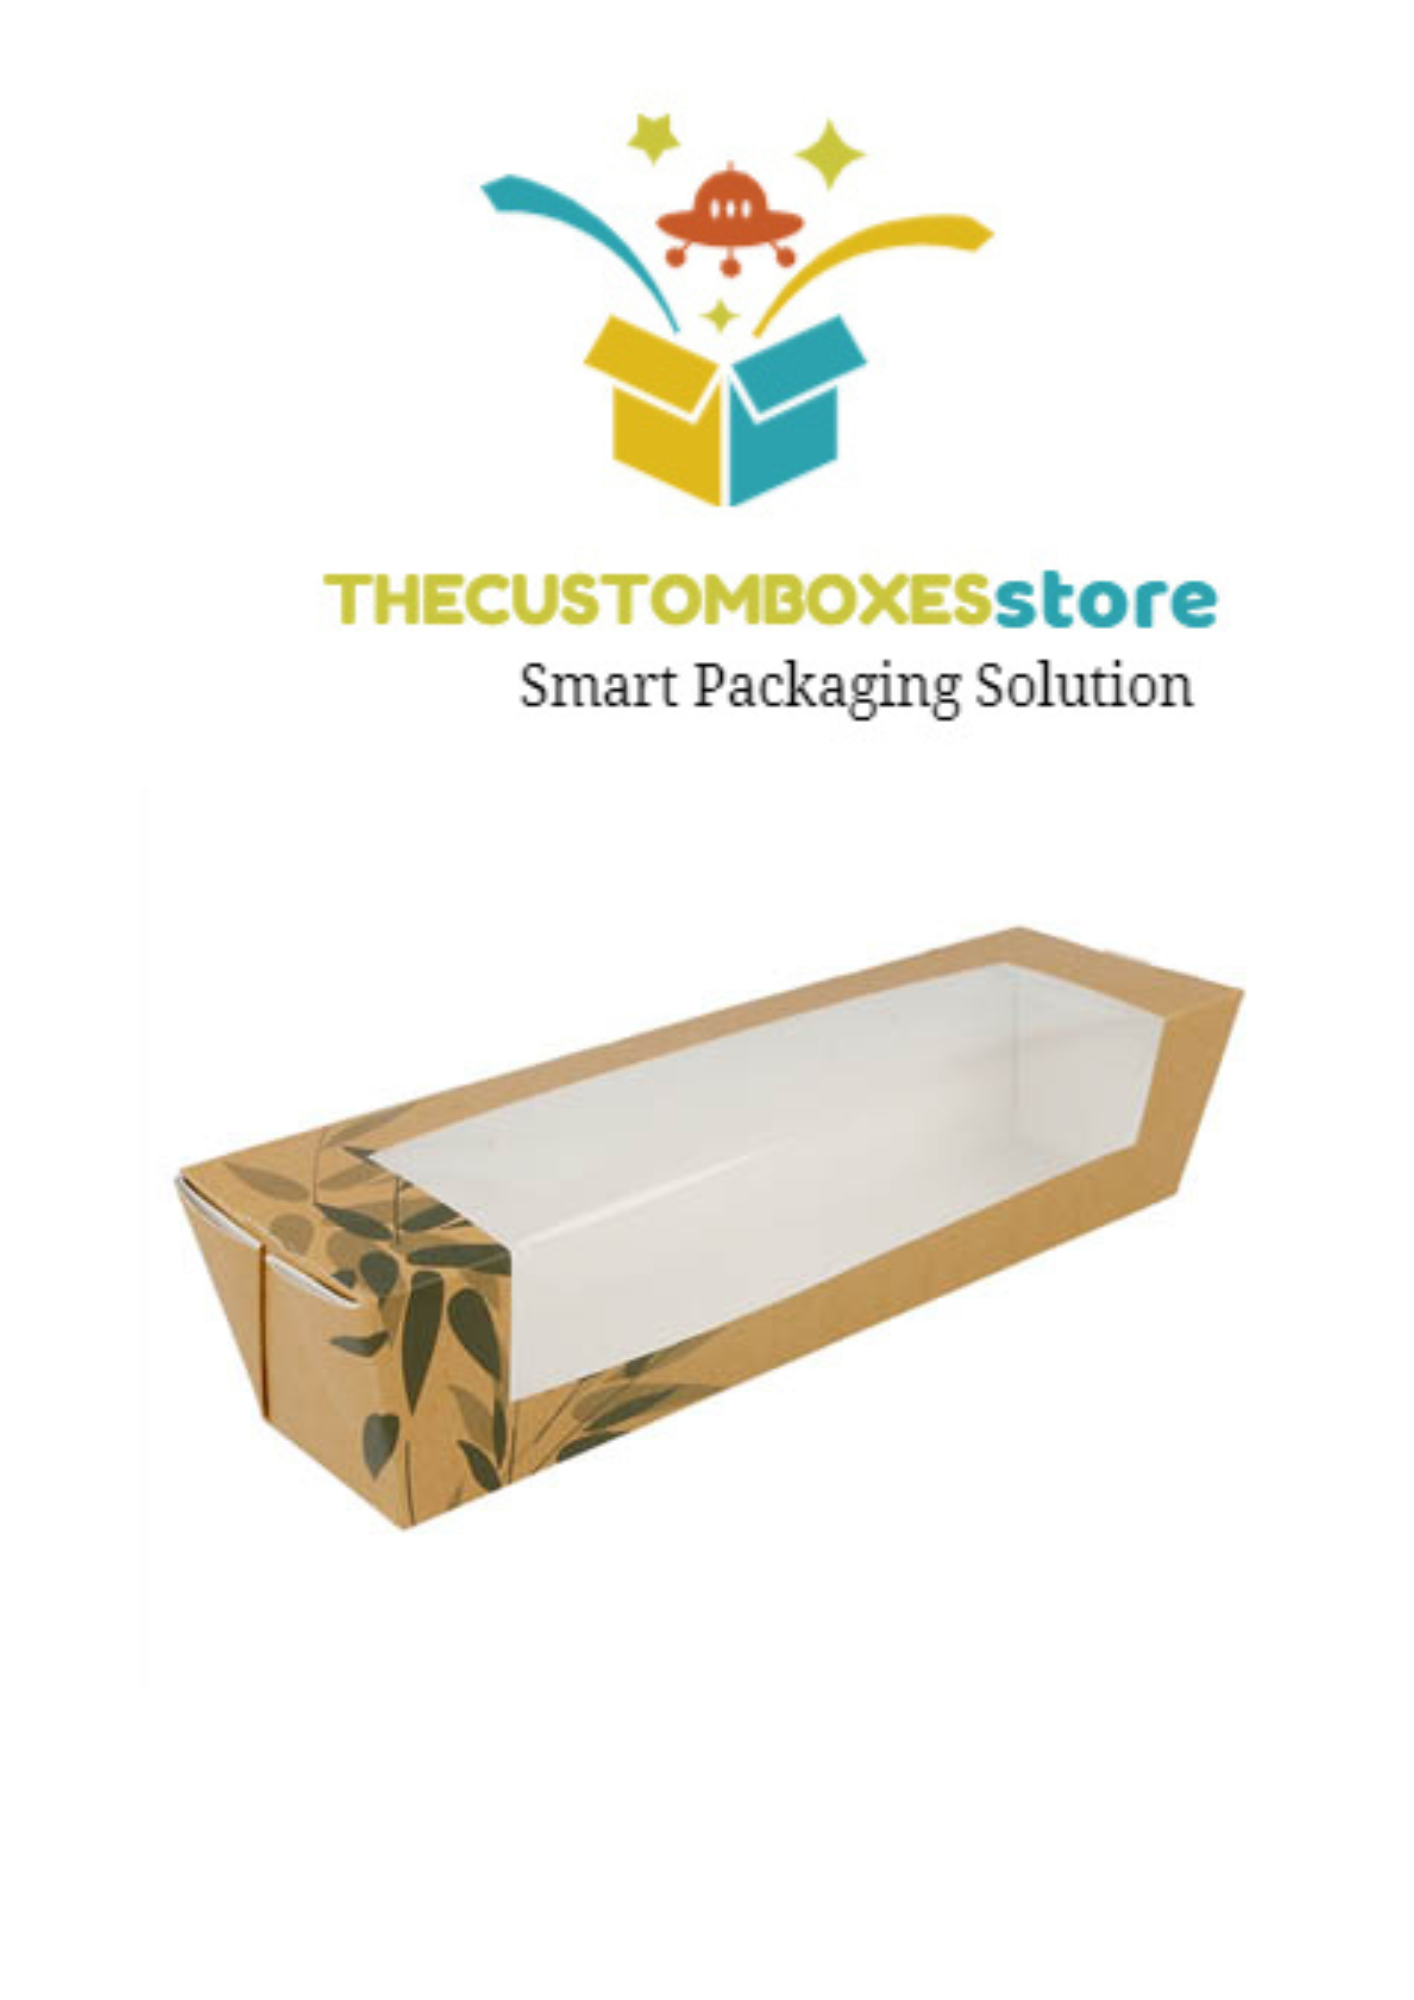 cardboard-sandwich-boxes.jpg